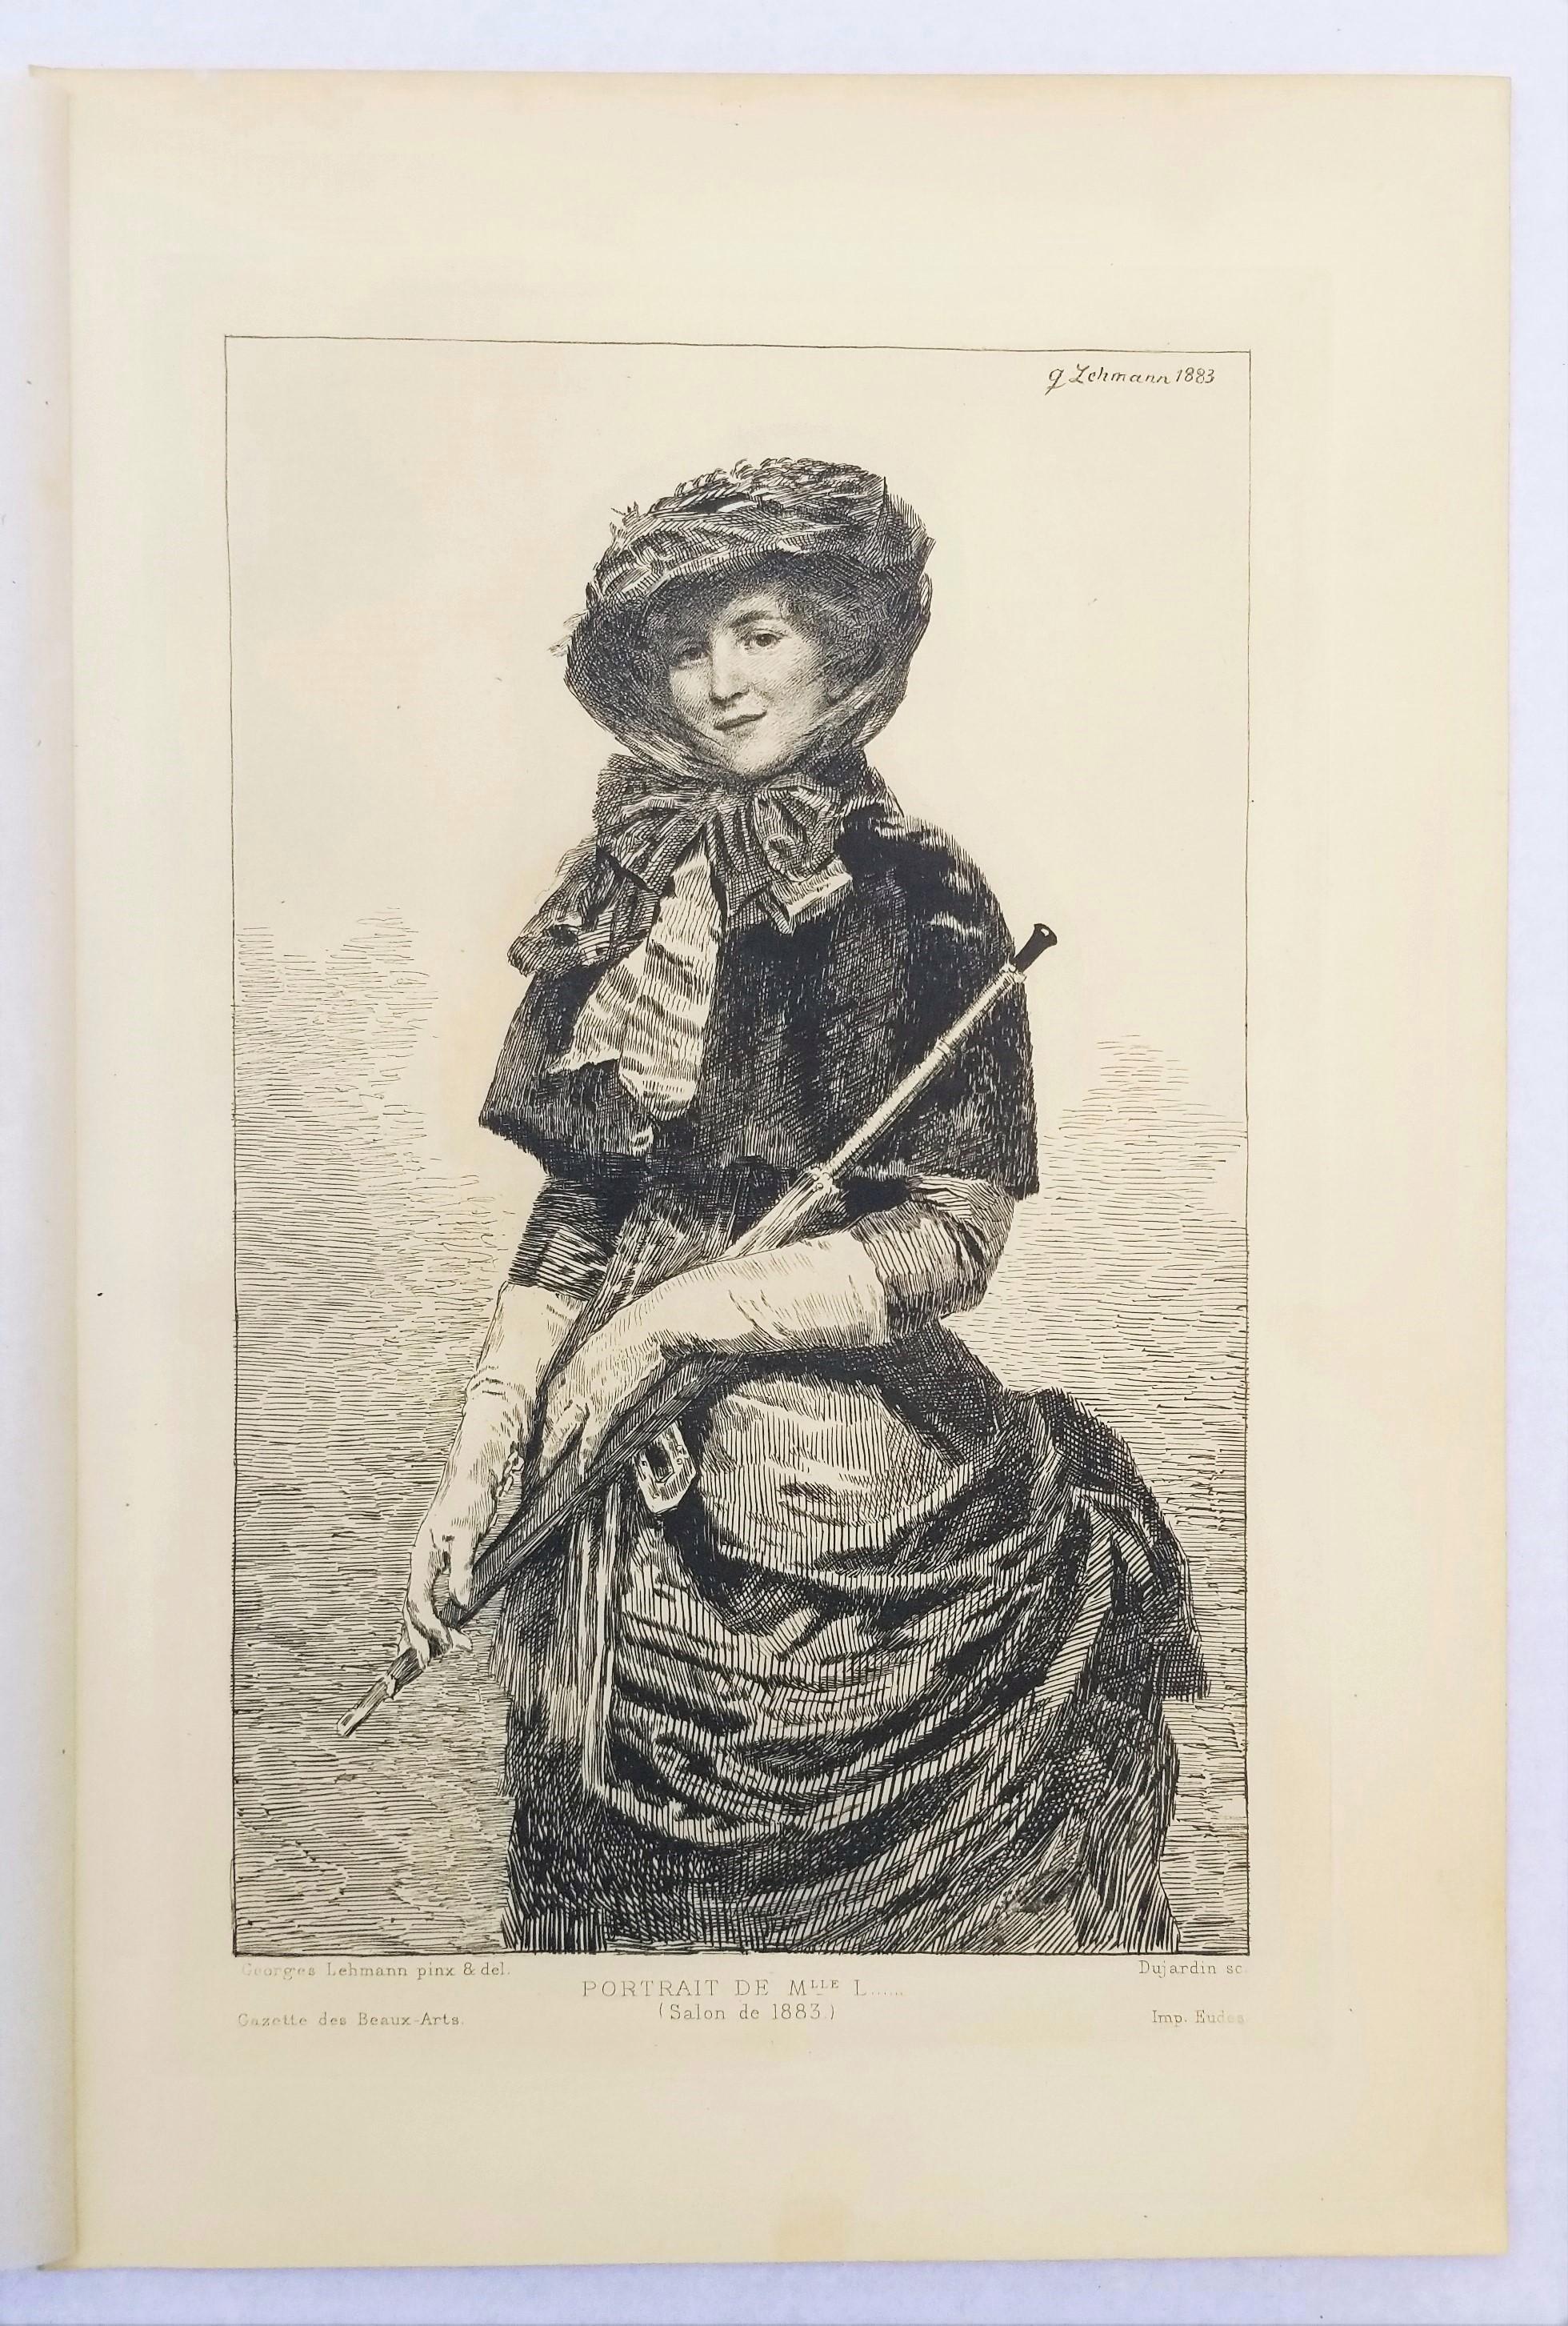 Porträt de Mlle L. Porträt (Porträt von Miss L...) /// Figurative Dame alter Meister (Viktorianisch), Print, von Paul Rodolphe Joseph Dujardin